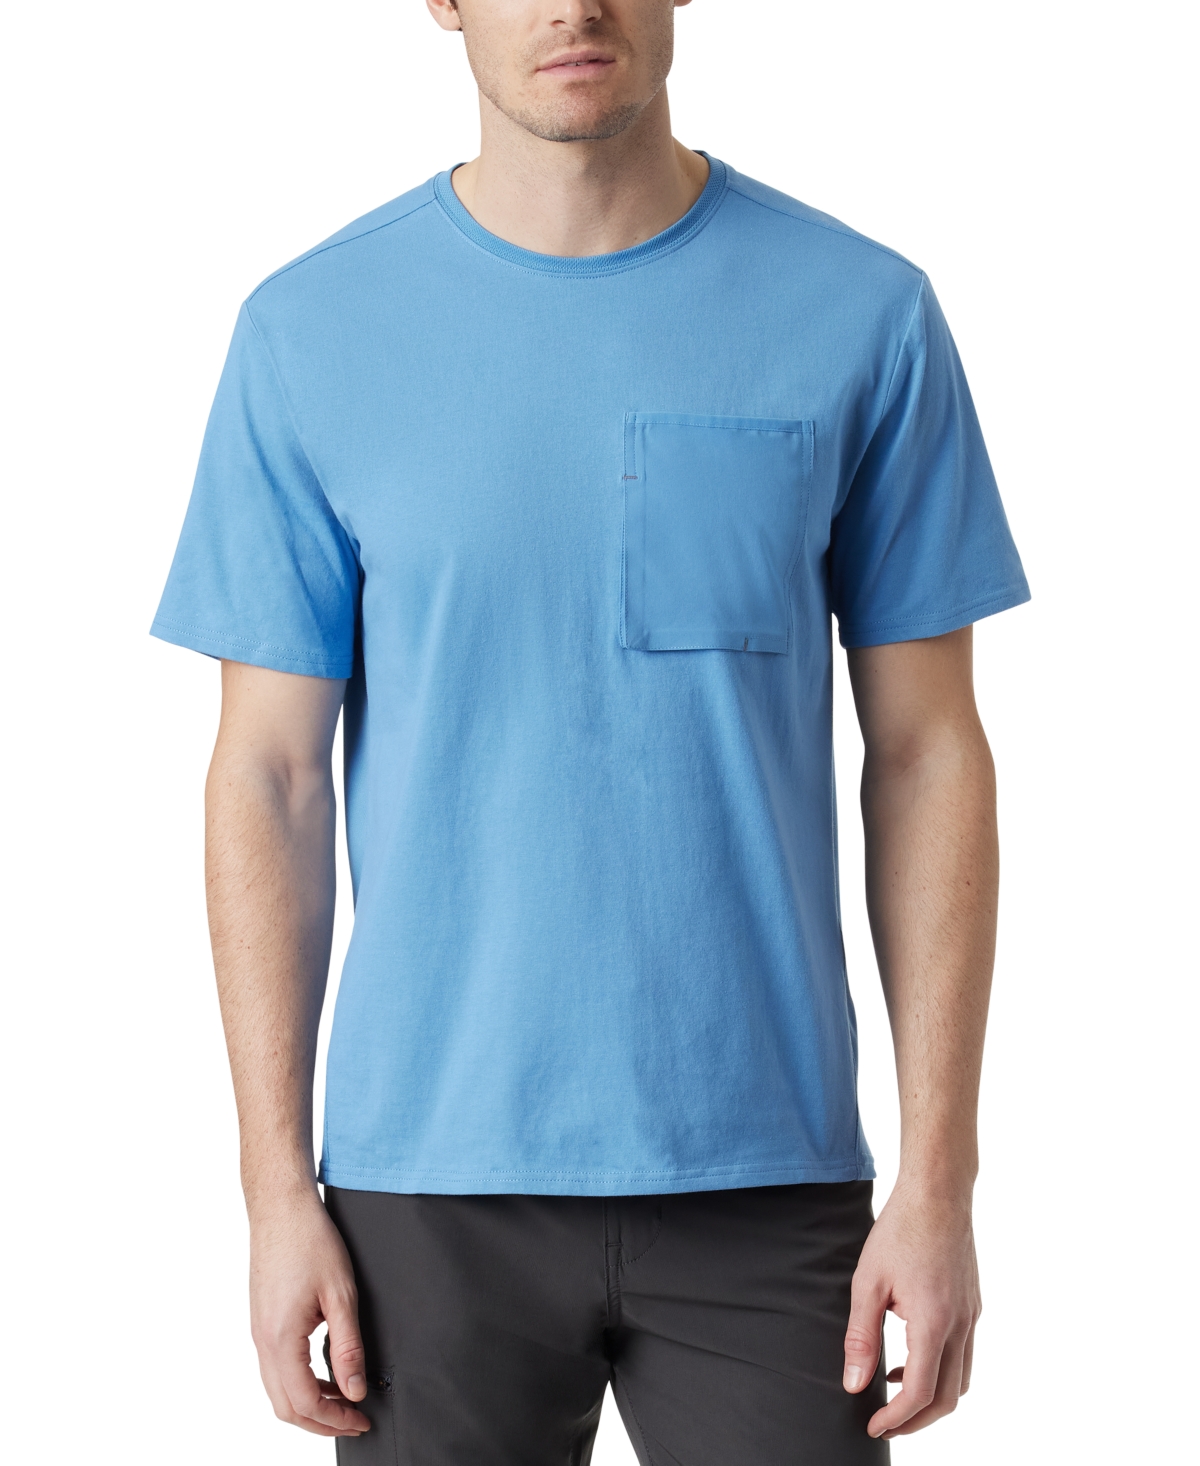 Men's Short-Sleeve Pocket T-Shirt - Forged Iron